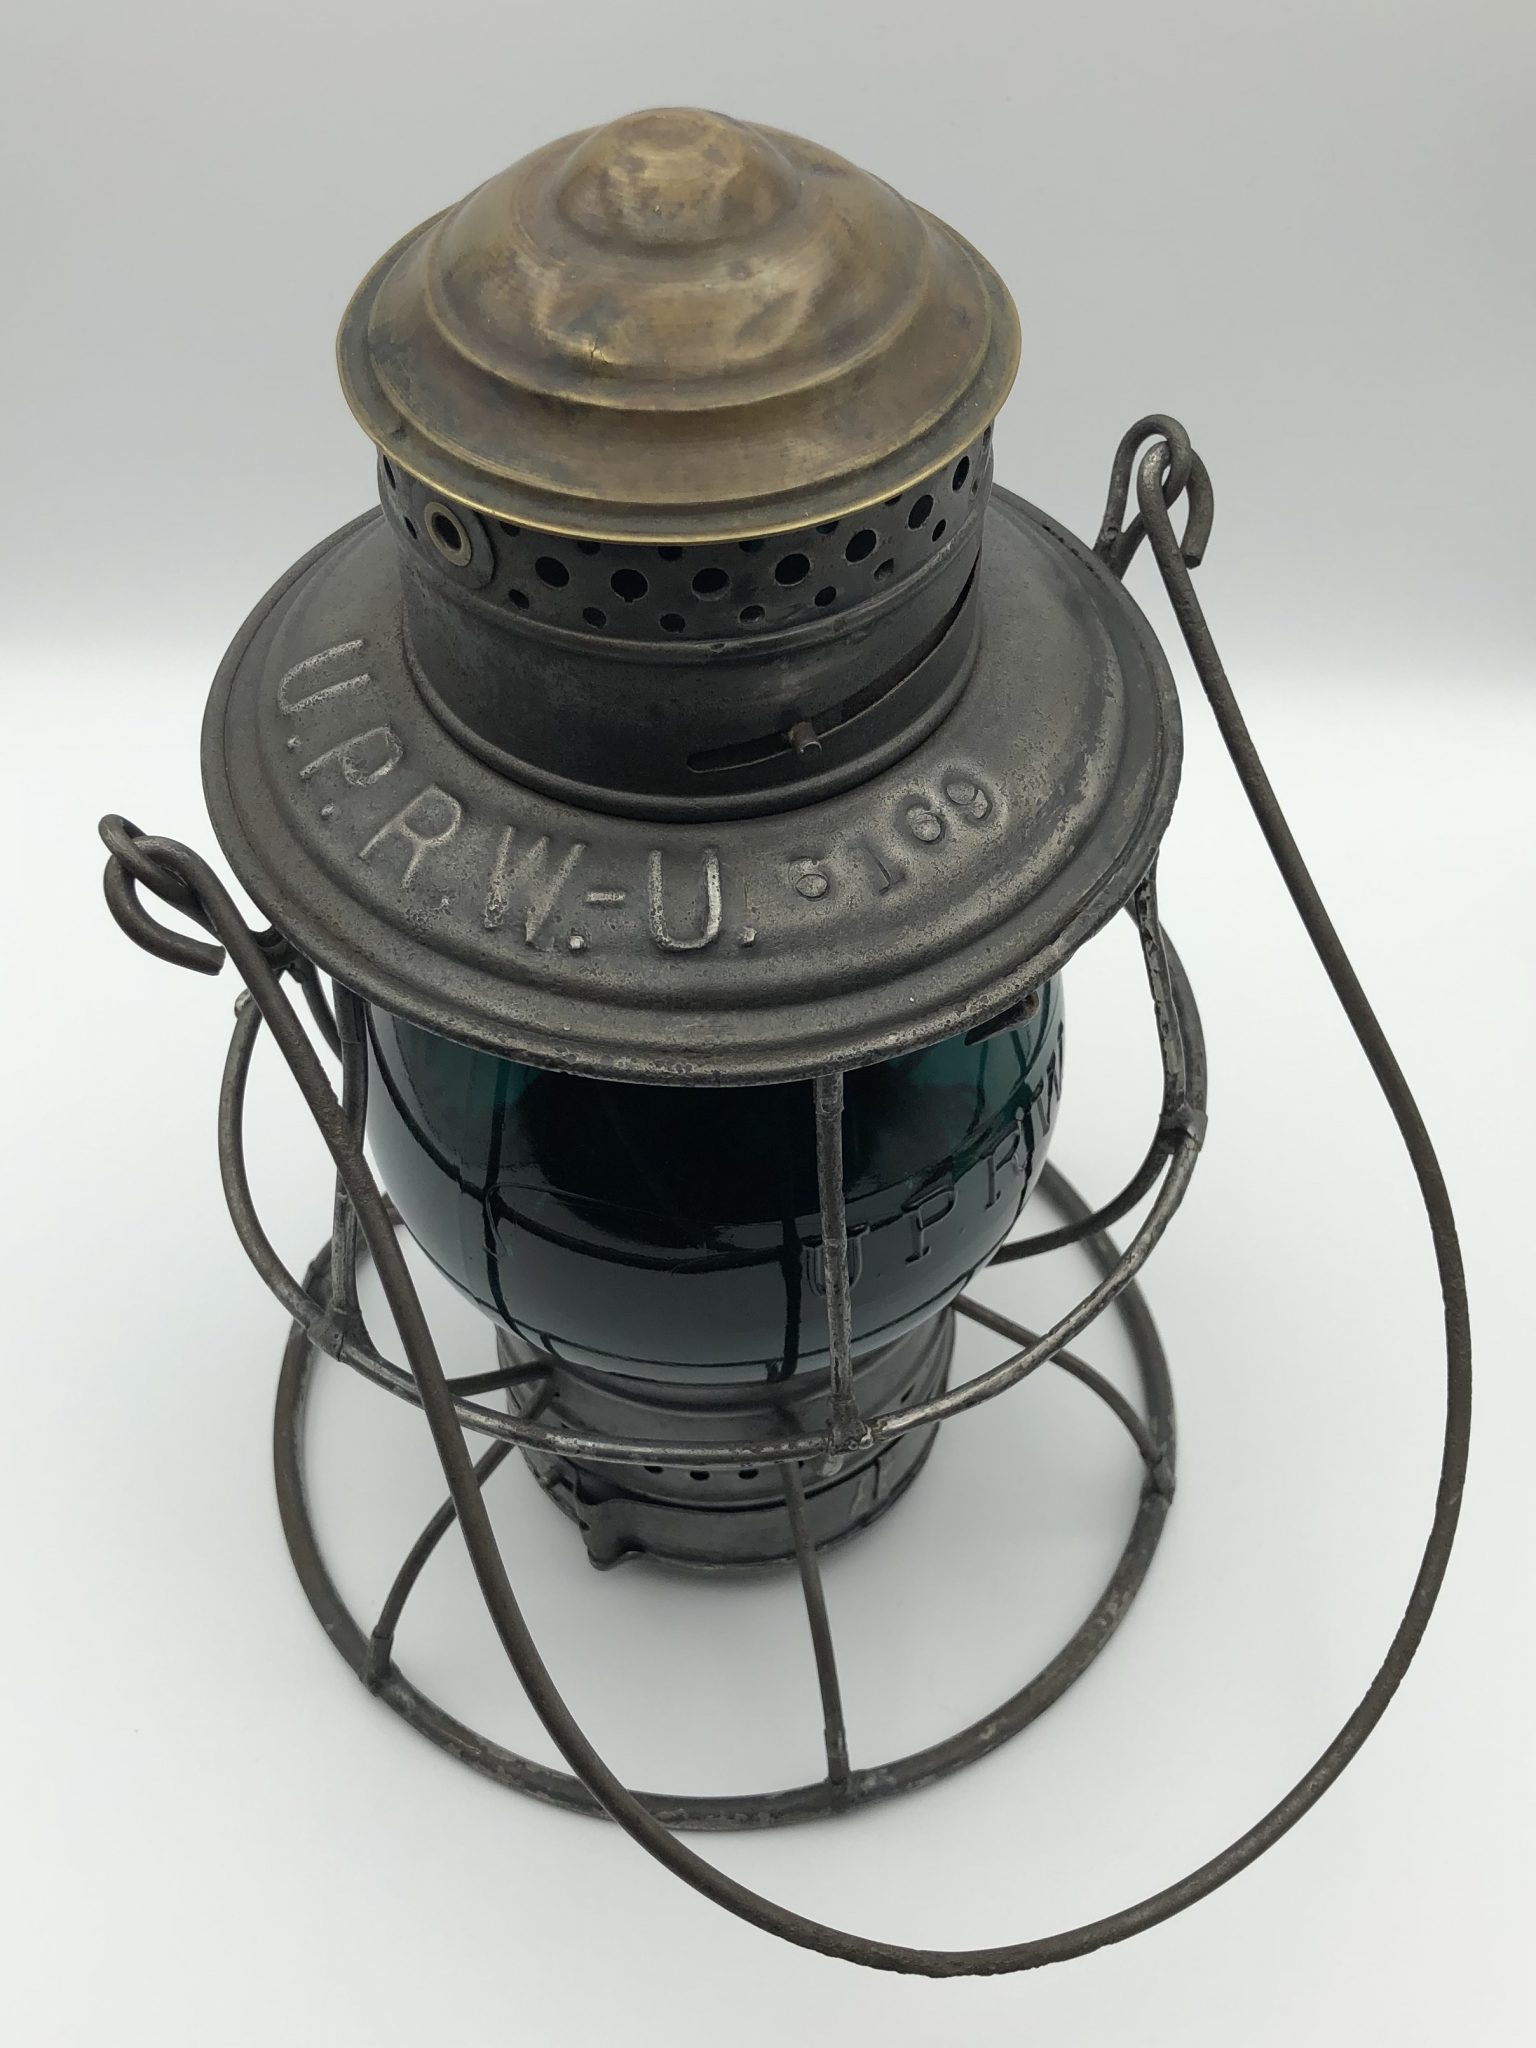 uprw-u railroad lantern-union pacific railway-utah division-railroadiana-antique